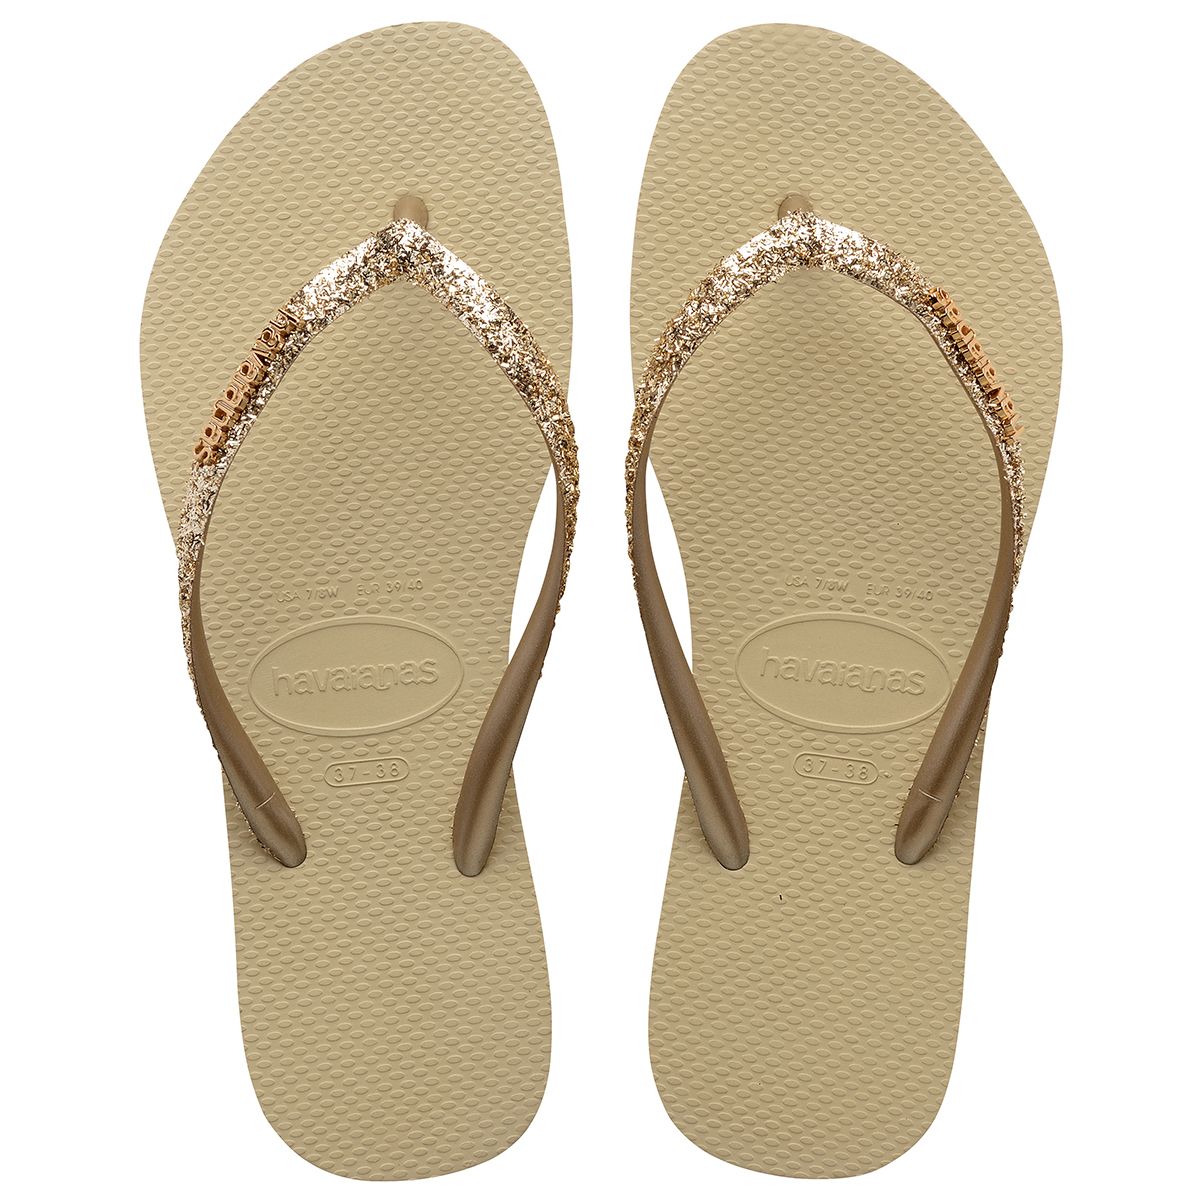 Havaianas Slim Glitter 2 Womens Sandal 0154-Sand Grey 7